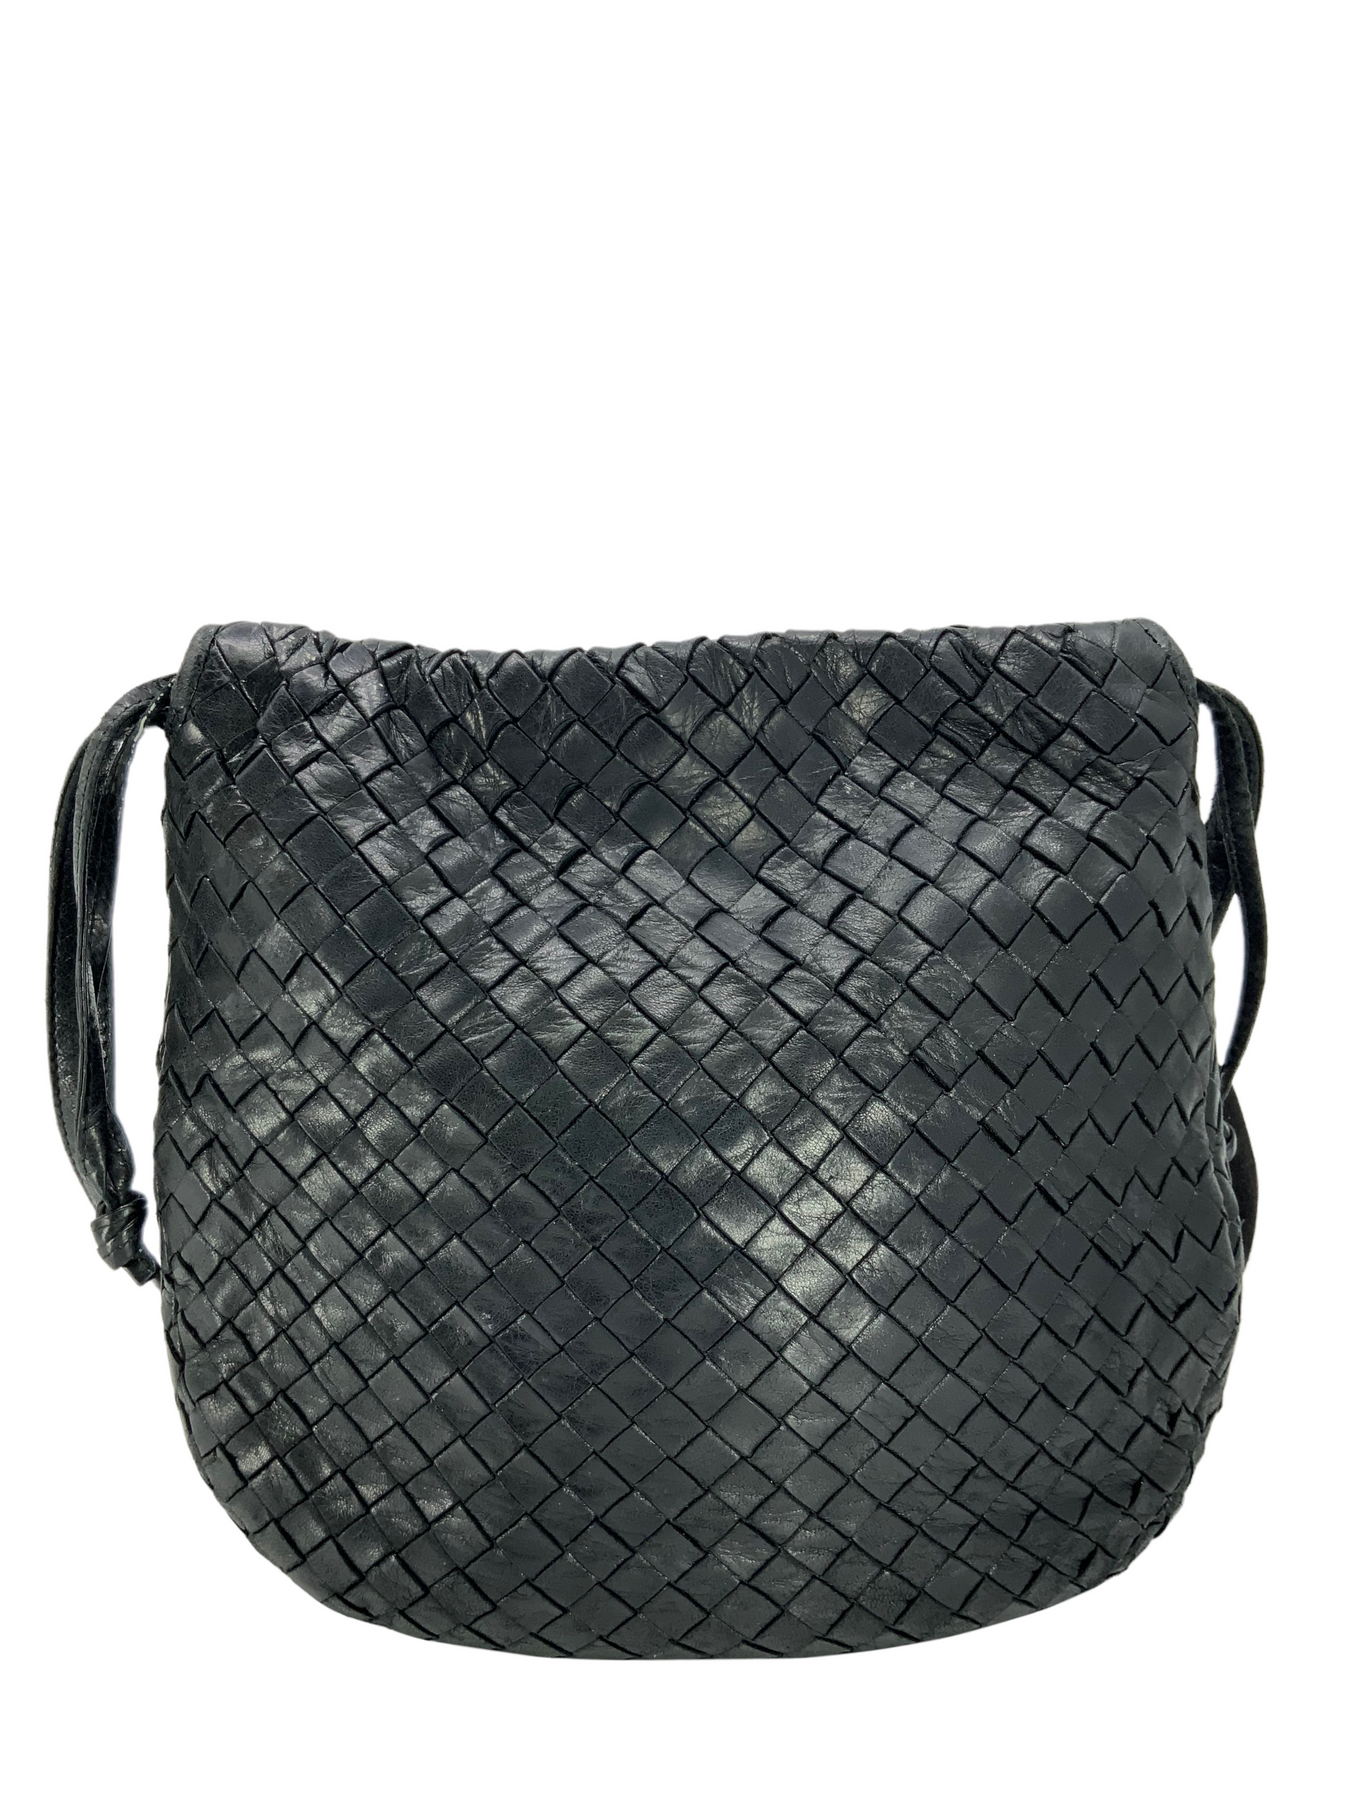 Bottega Veneta Intrecciato Woven Nappa Leather Flap Shoulder Bag